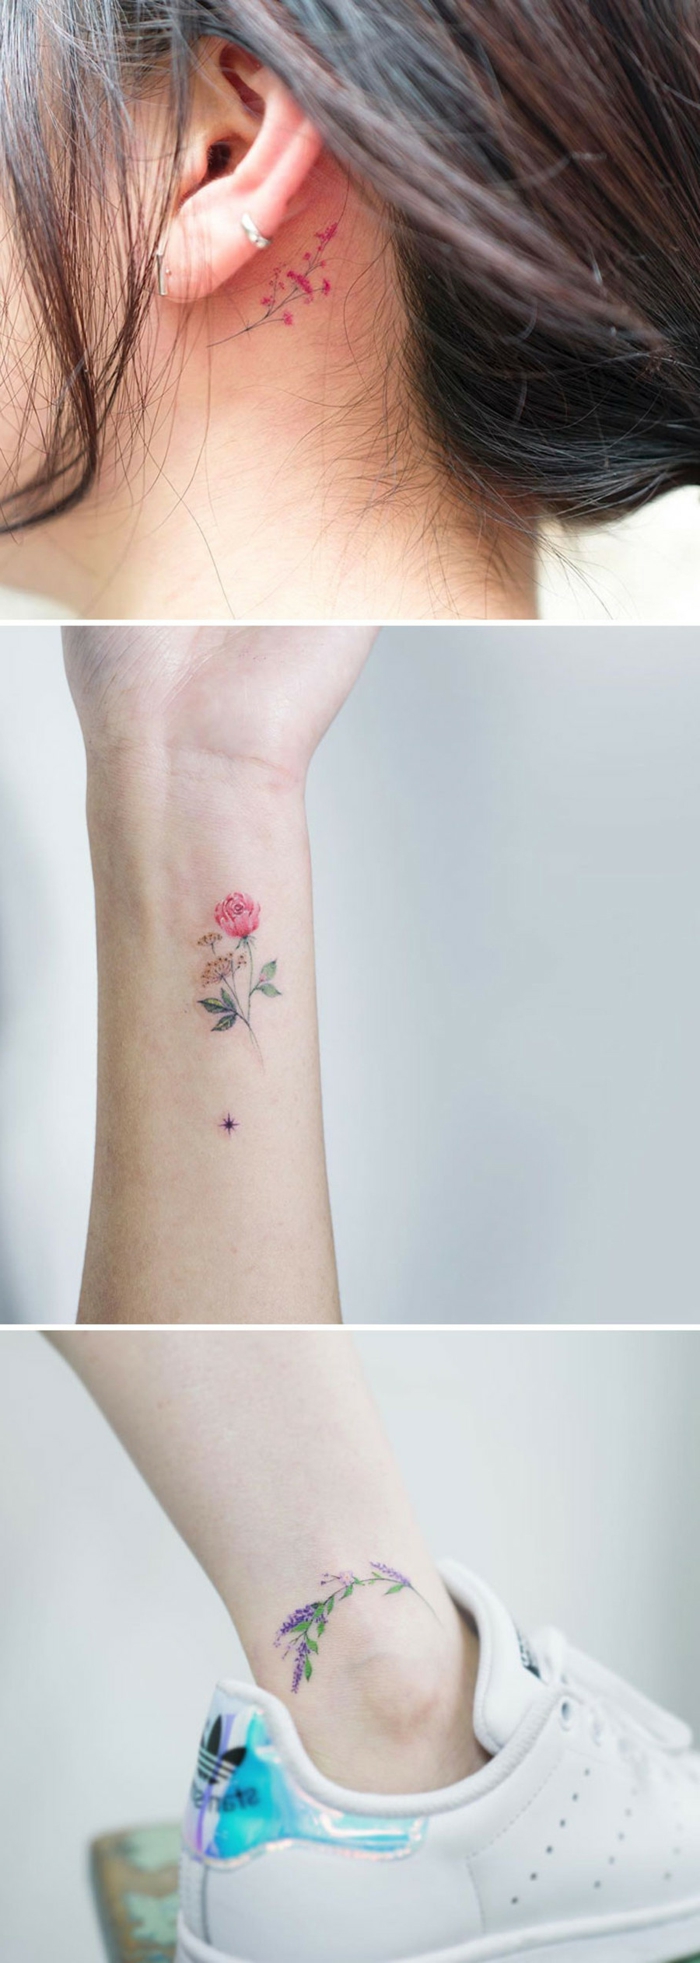 Tatuajes de flores – más de 80 ideas inspiradoras